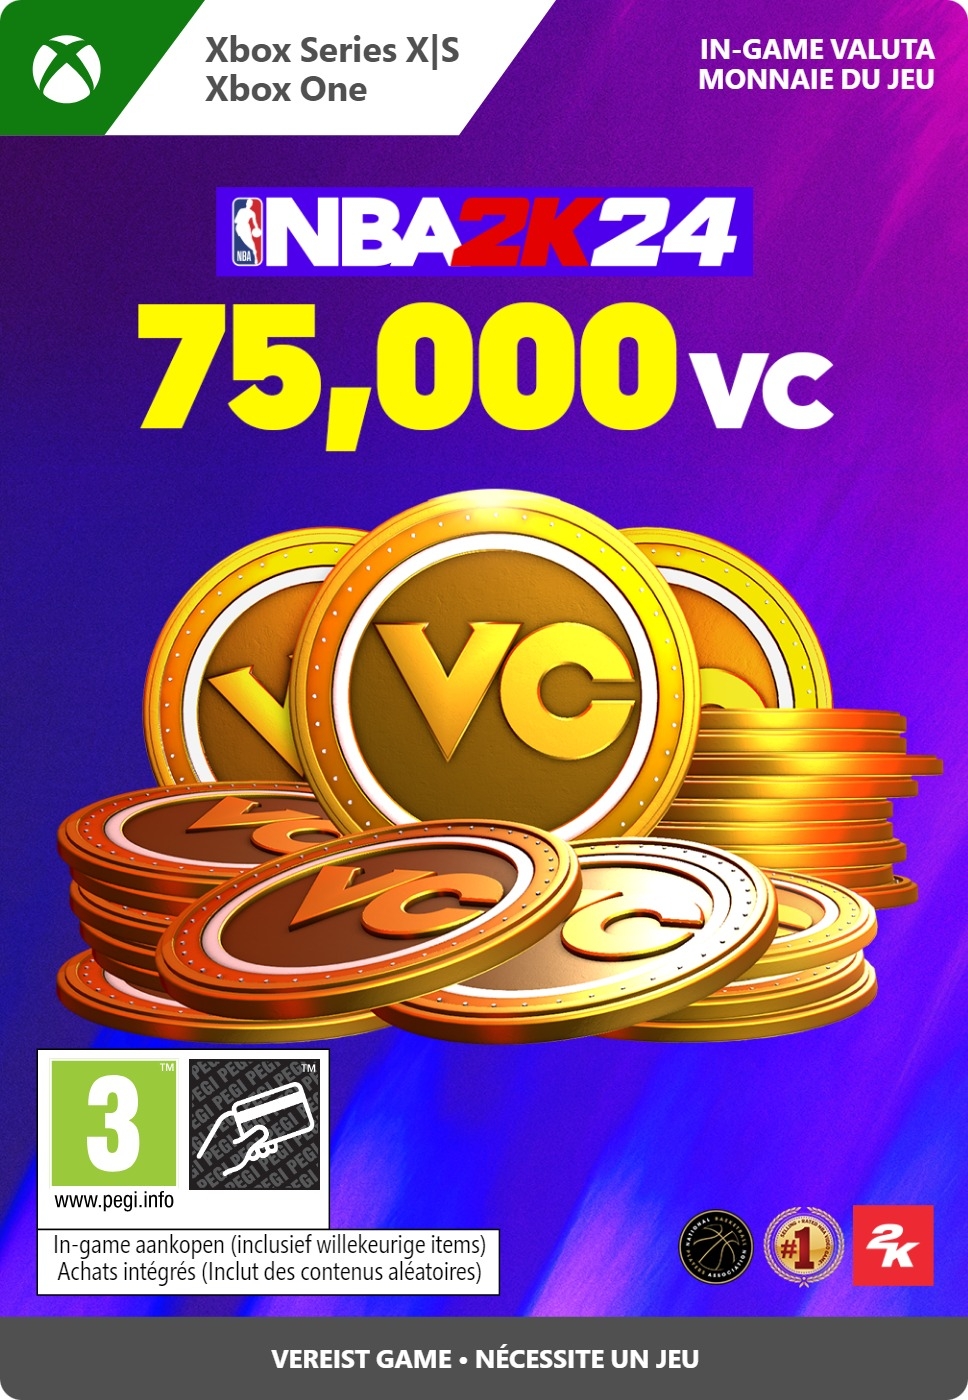 75.000 Xbox NBA 2K24 VC - Xbox Series X|S/One (direct digitaal geleverd)